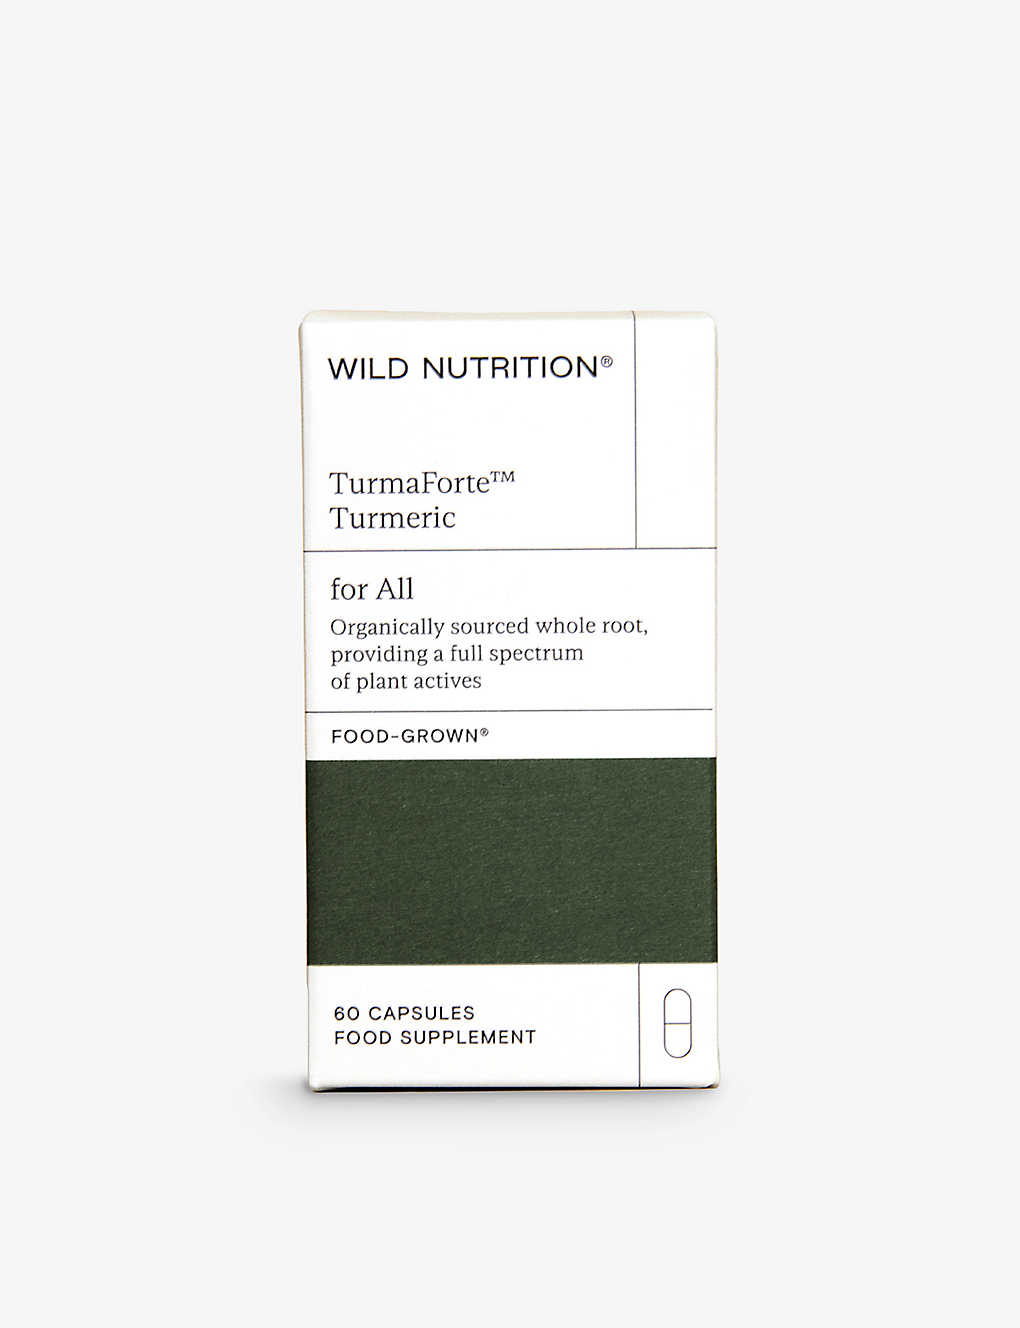 Wild Nutrition Organic Turmaforte Turmeric Supplements 60 Capsules